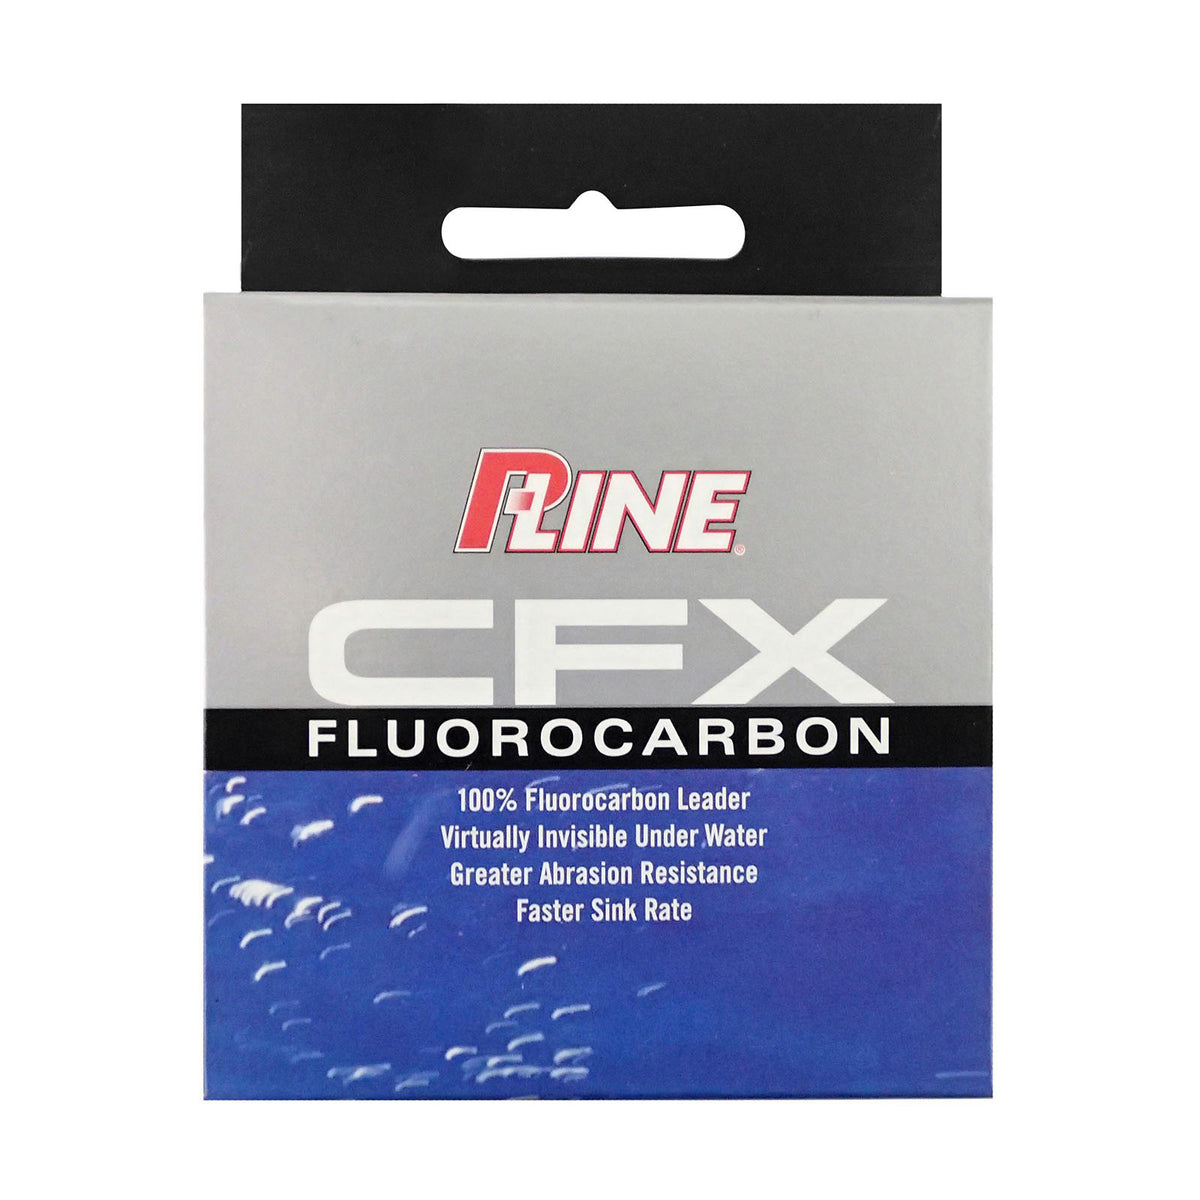 P-Line CFX Fluorocarbon